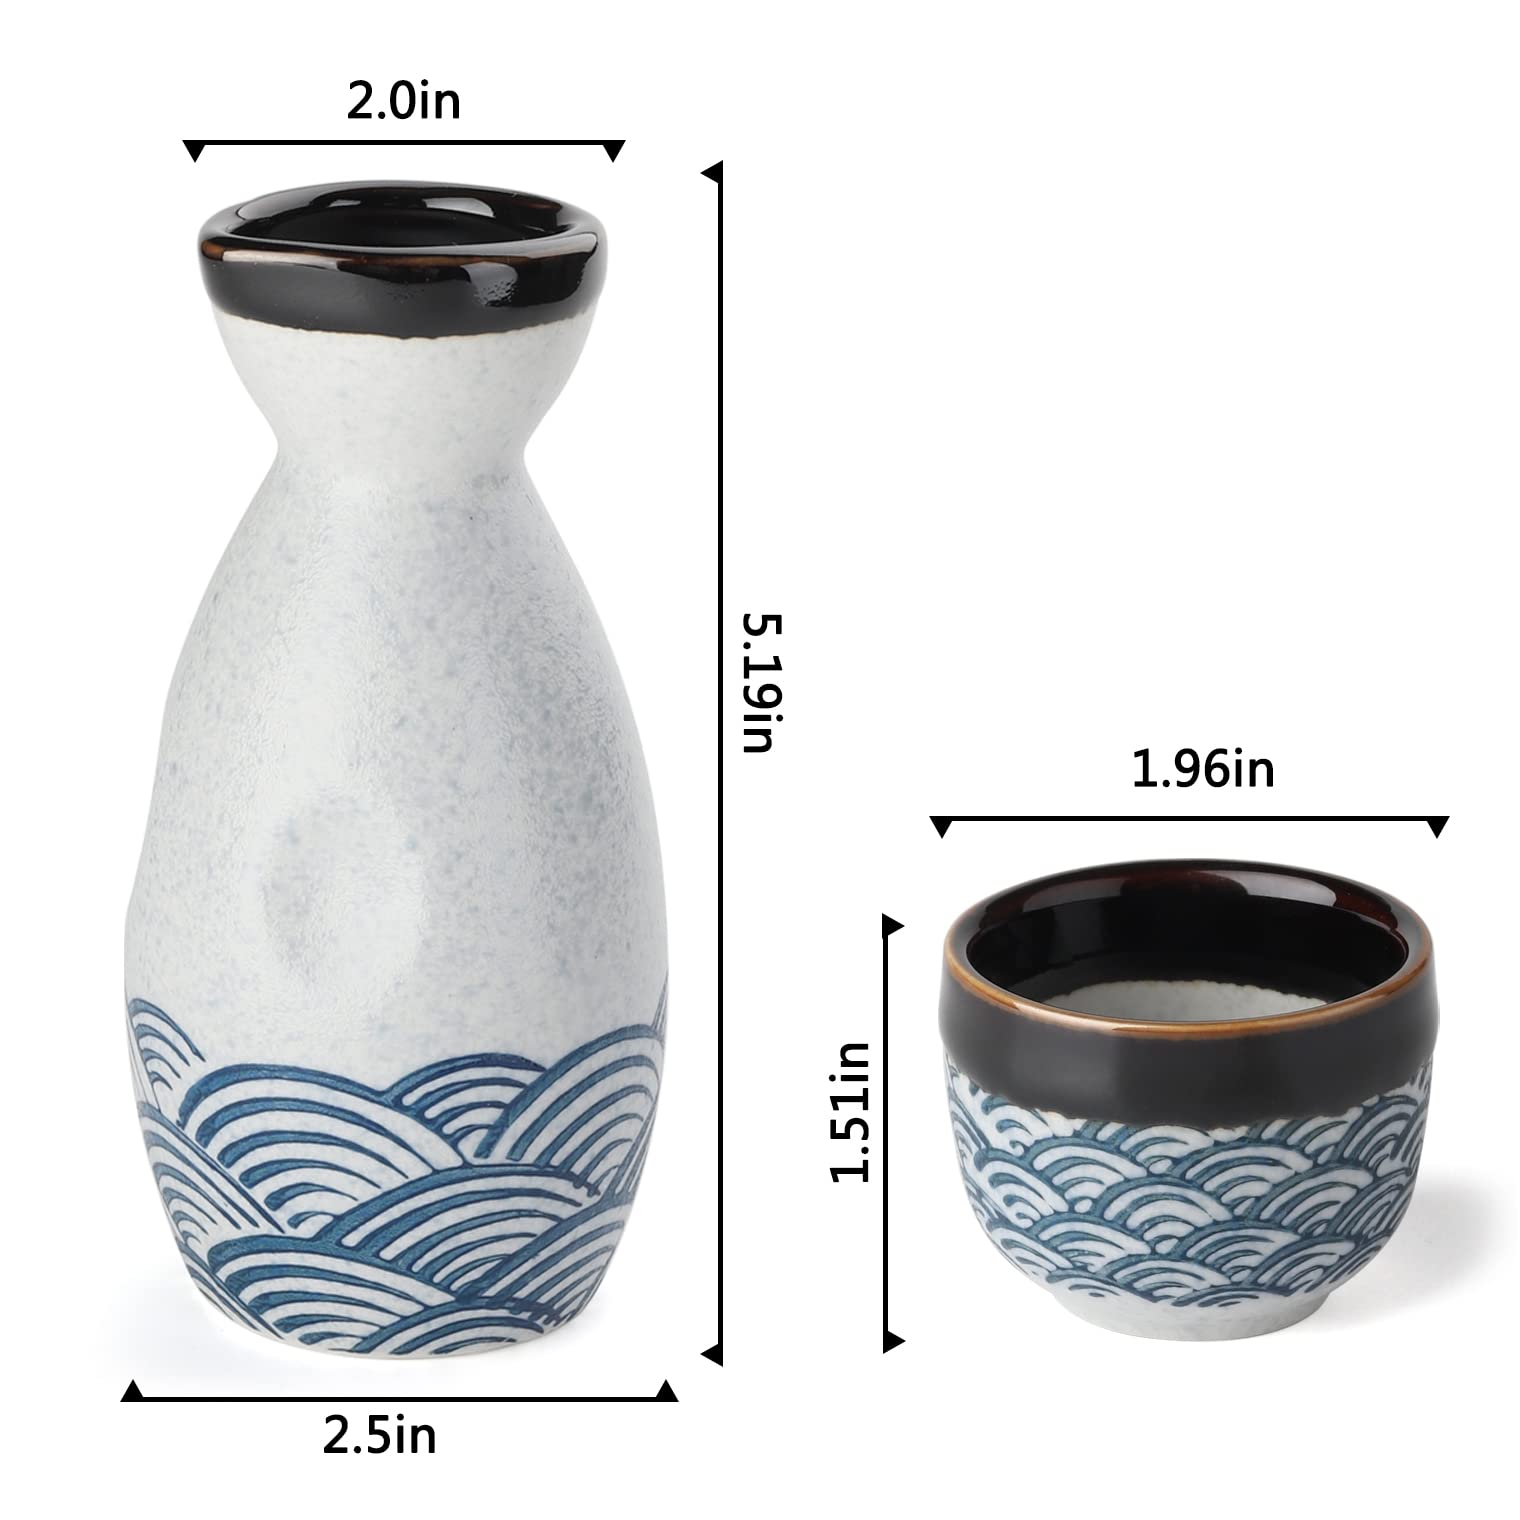 Sake Set Ceramic Japanese Sake Set of 7 include 1 Sake bottle 6 Sake Cups for Hot or Cold Sake at Home or Restaurant